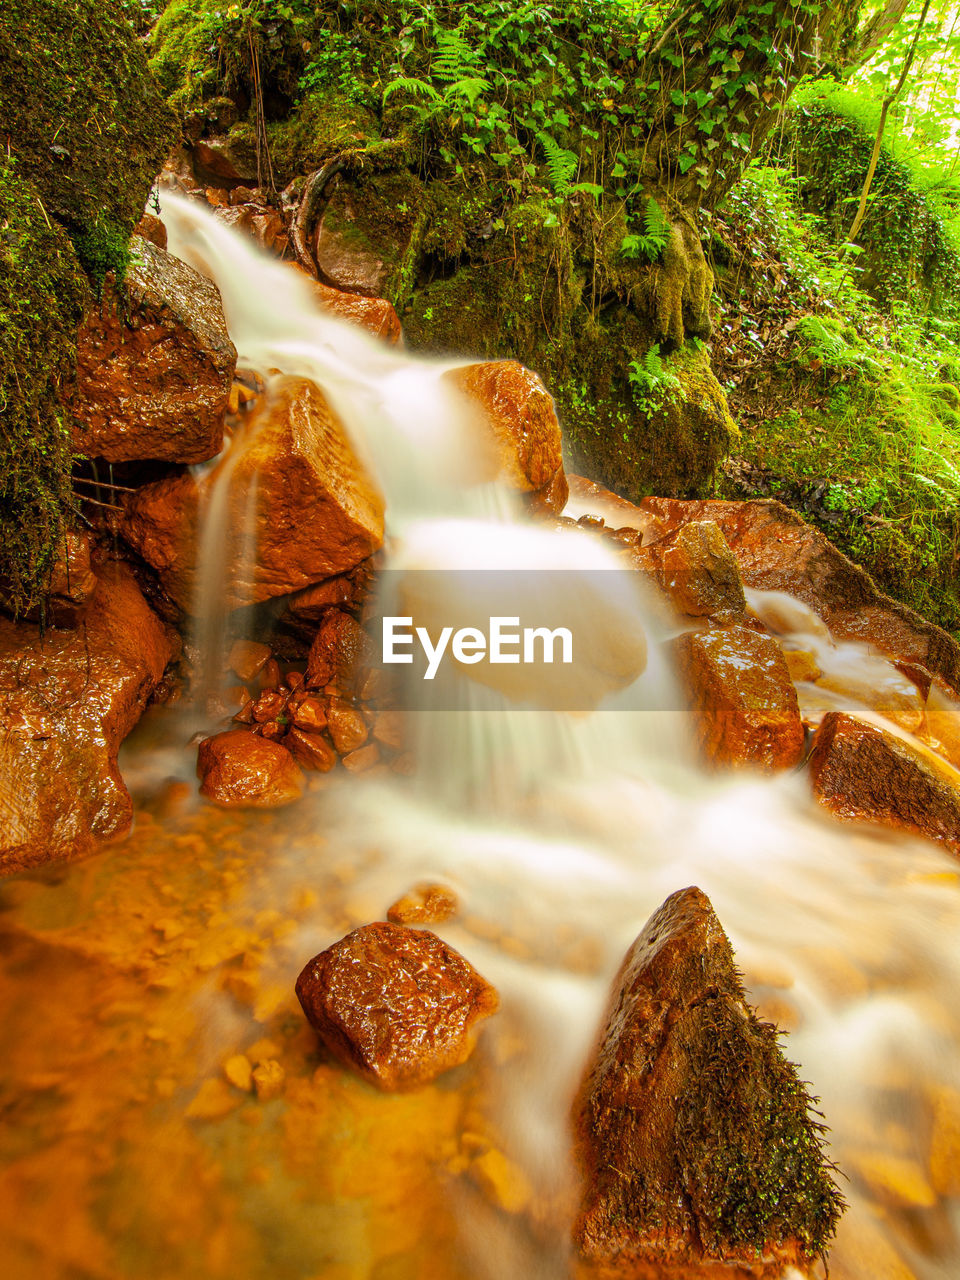 Water flowing through rocks in forest, ferric sediments mud